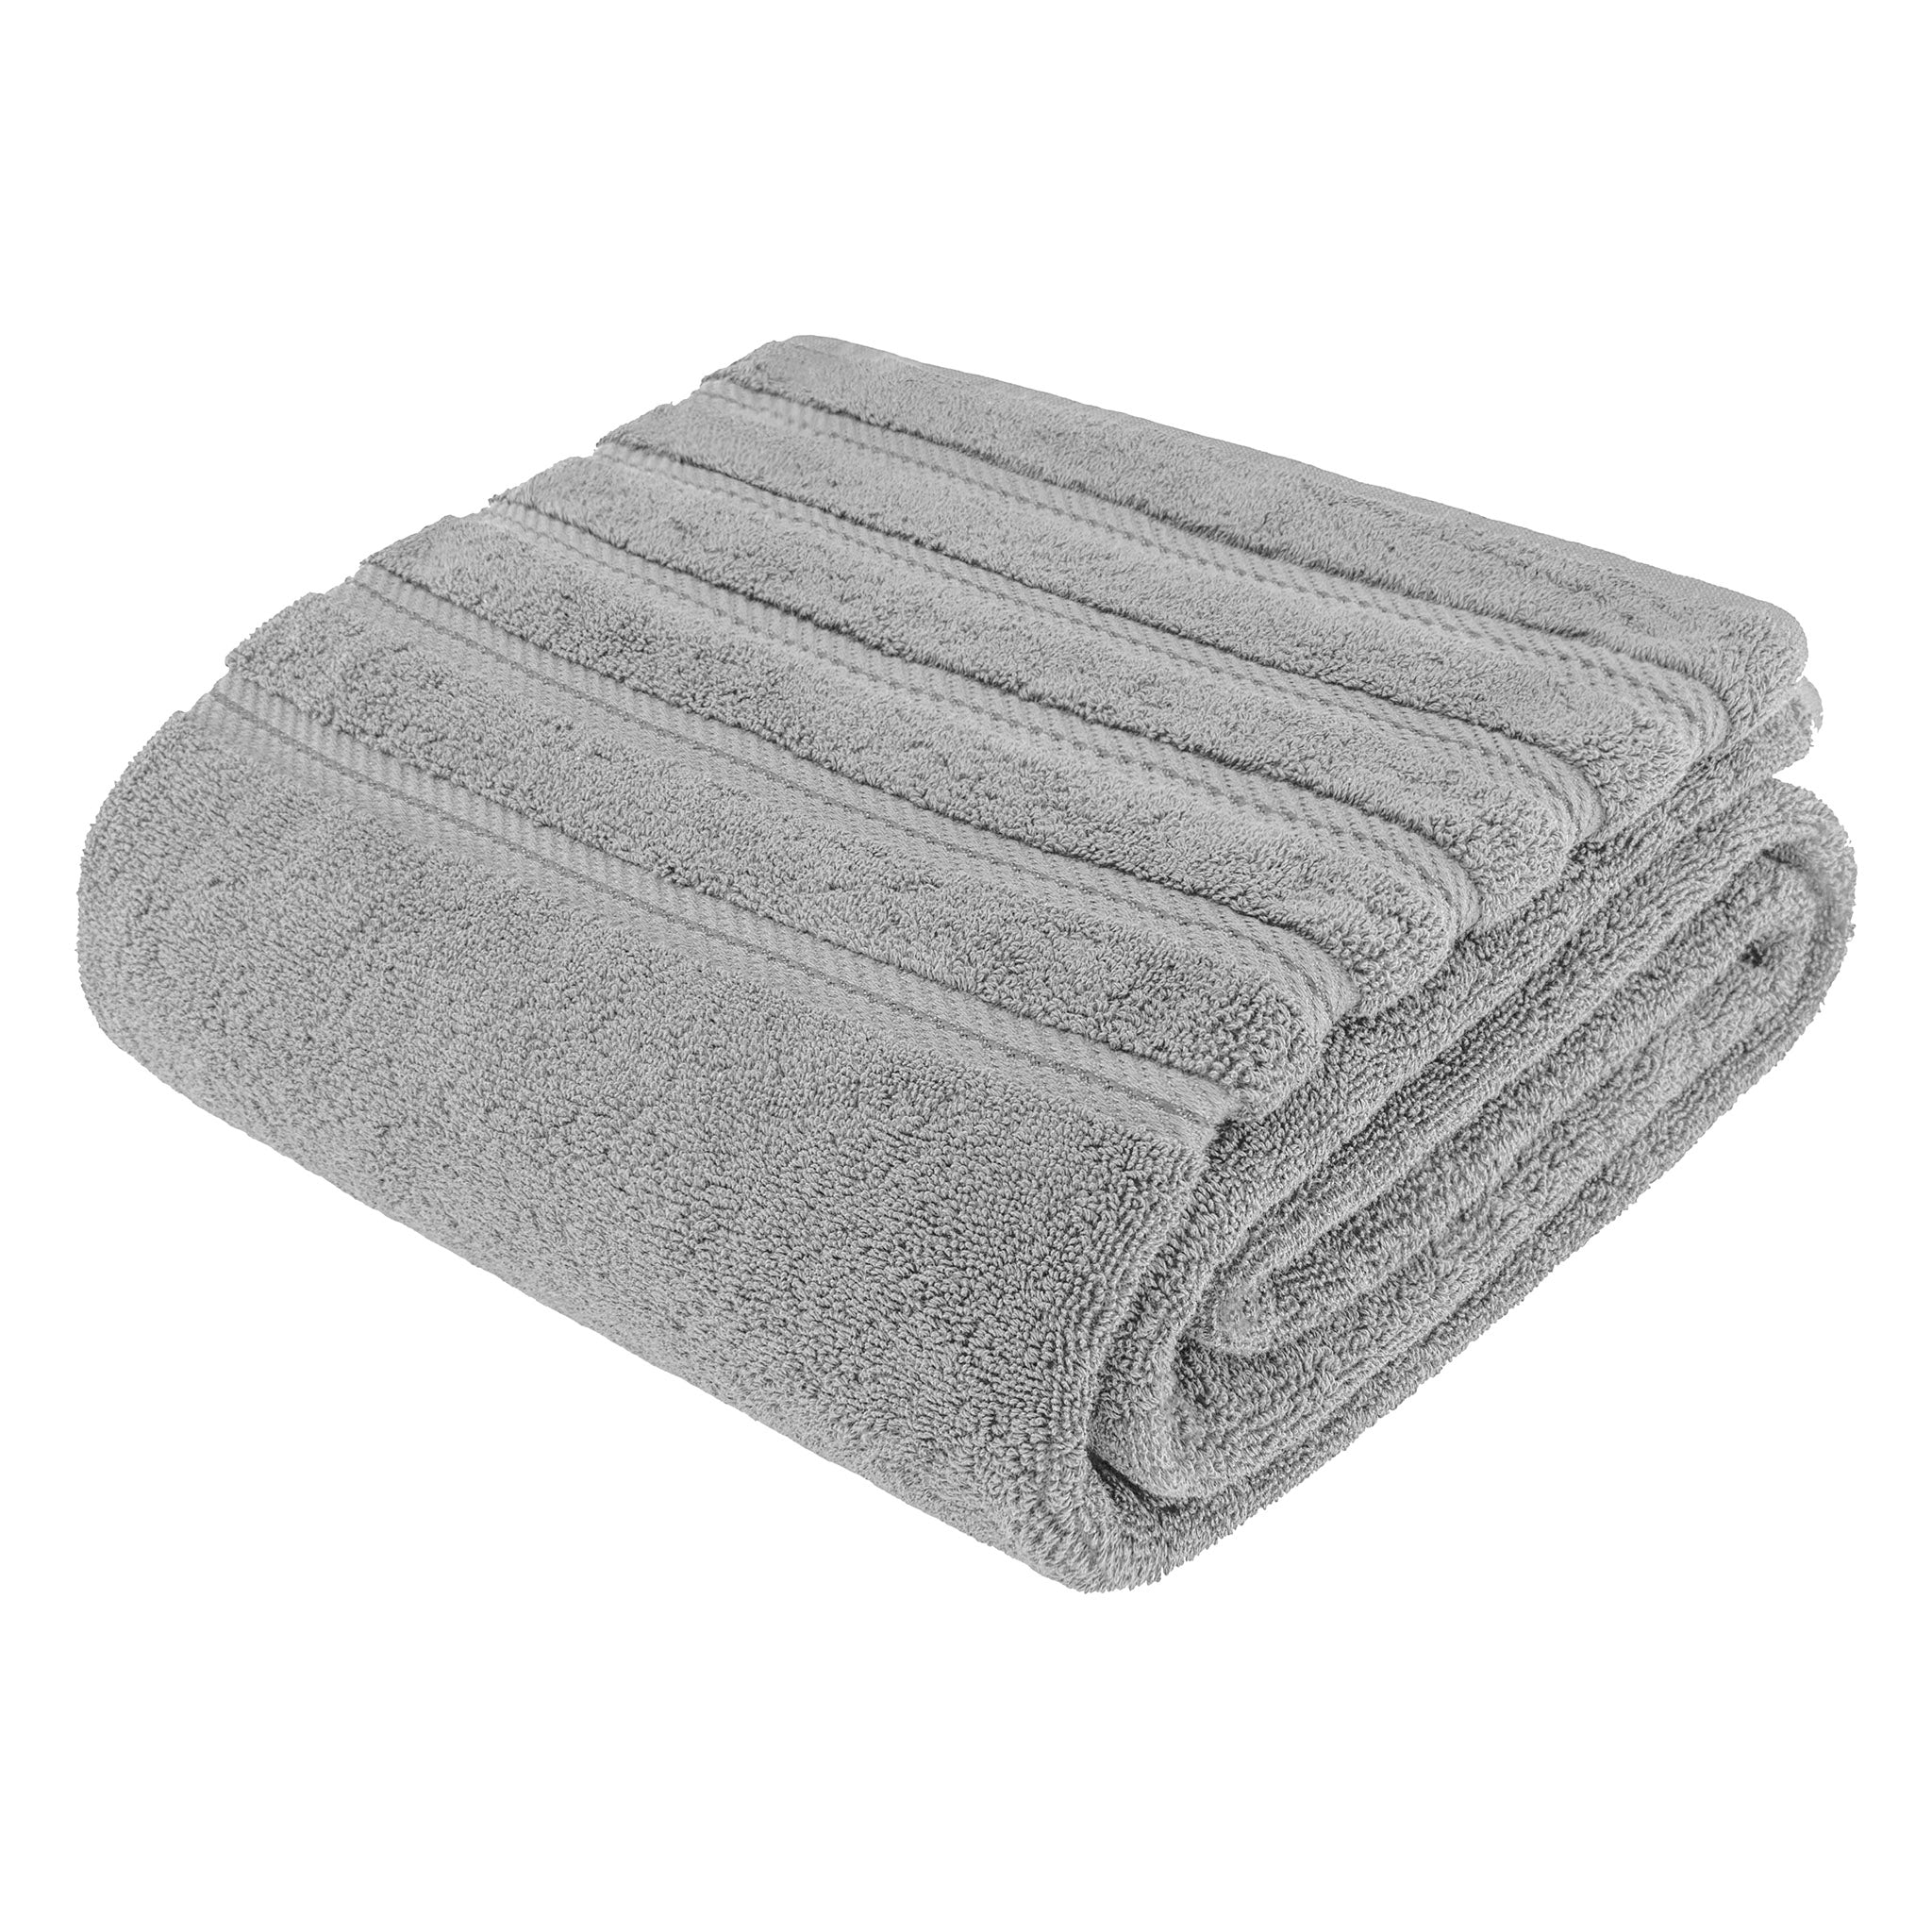 American Soft Linen 35x70 Inch 100% Turkish Cotton Jumbo Bath Sheet rockridge-gray-7